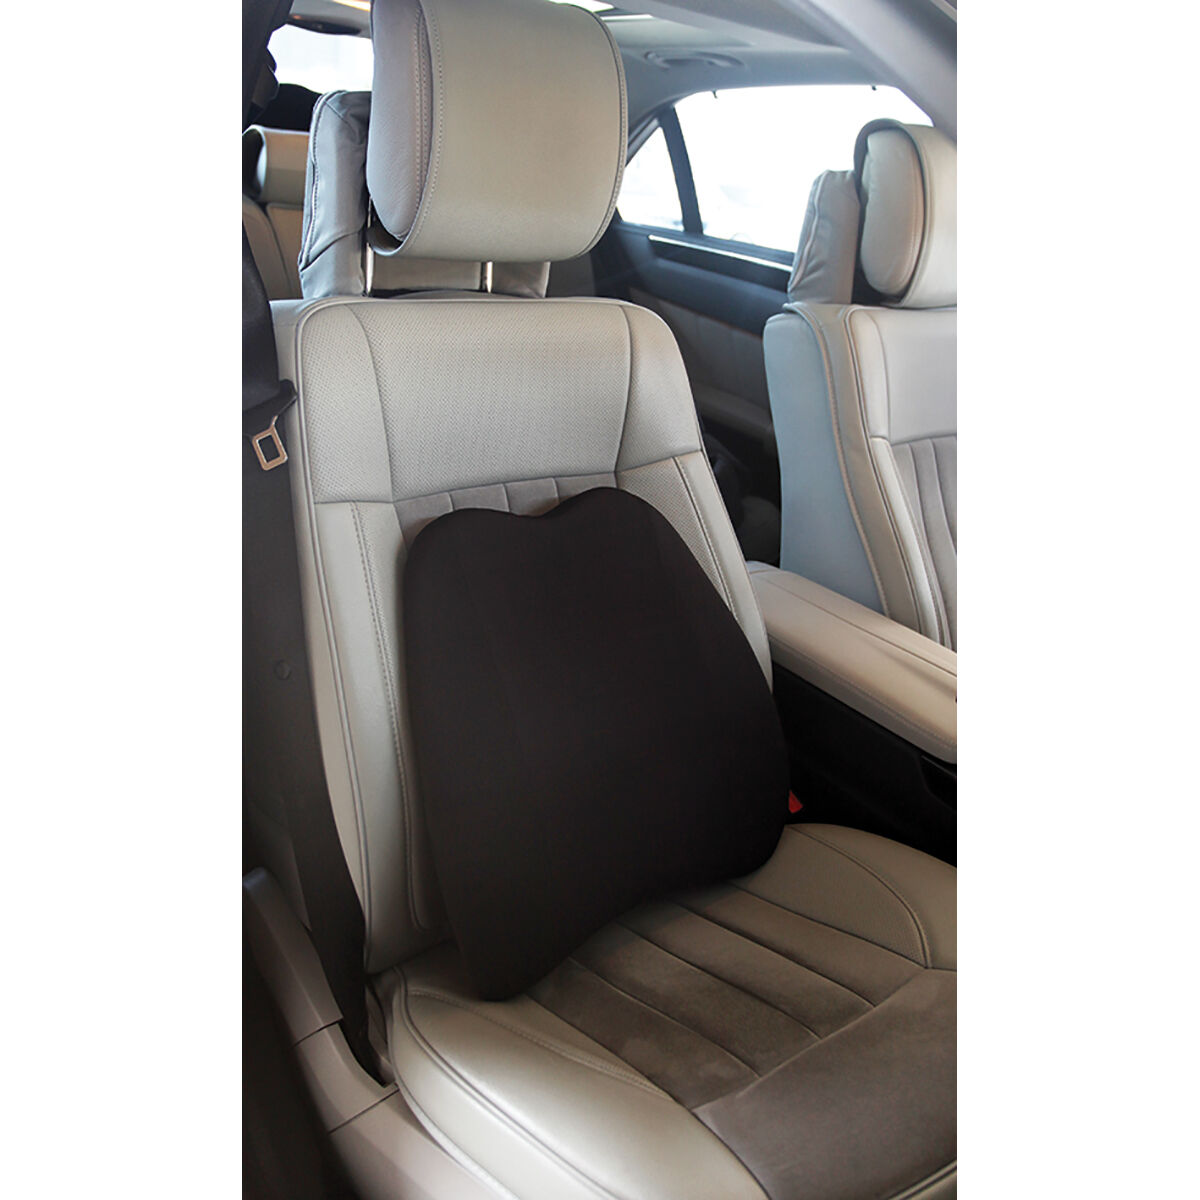 Car Seat Cushion for Driving - Multi-Use Memory Foam Car Seat Pad or Lumbar  Supp